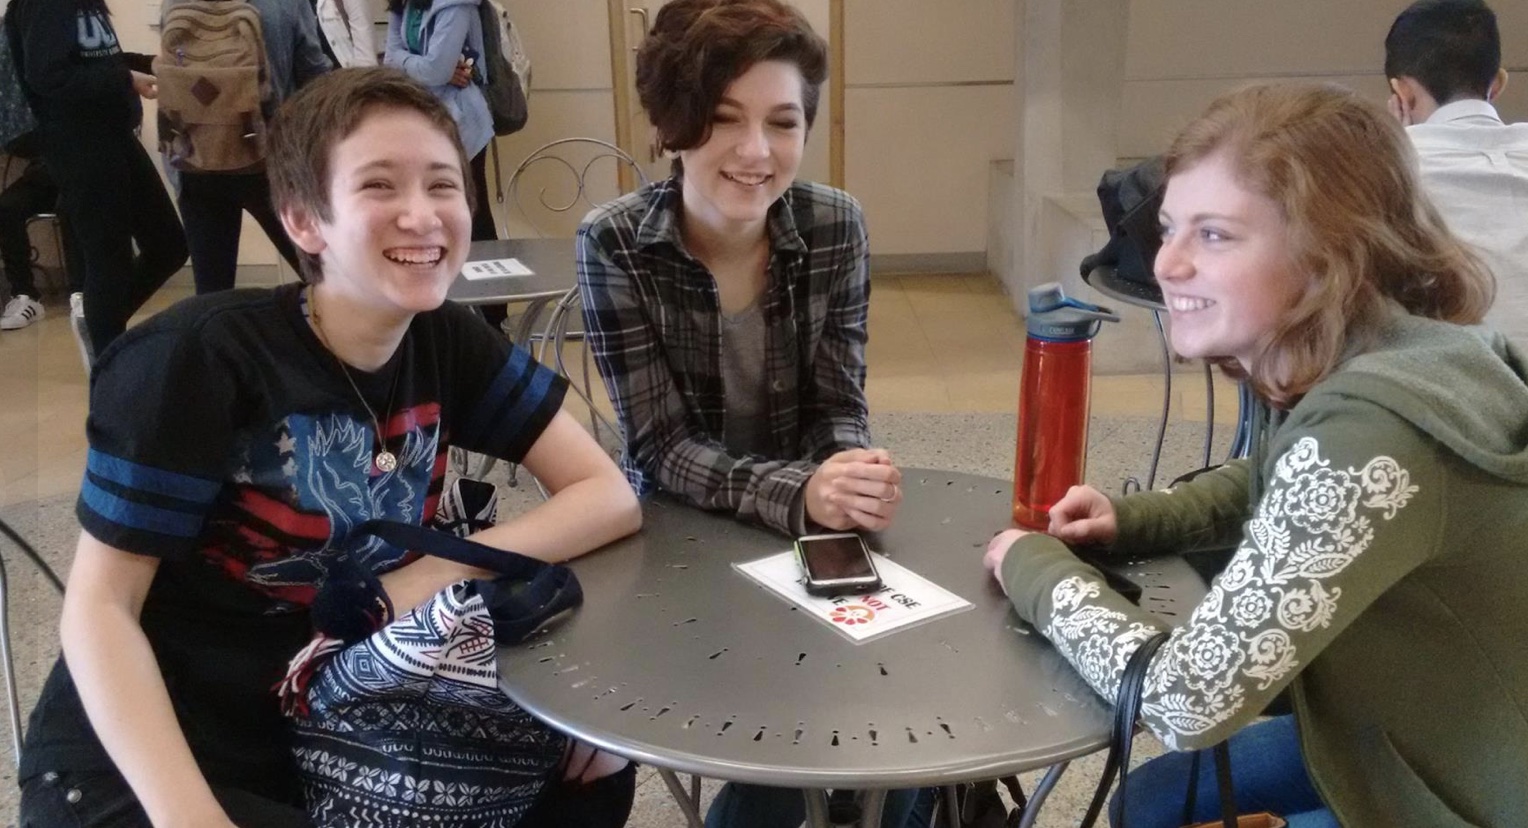 A group of 3 SET High students enjoying a break between classes